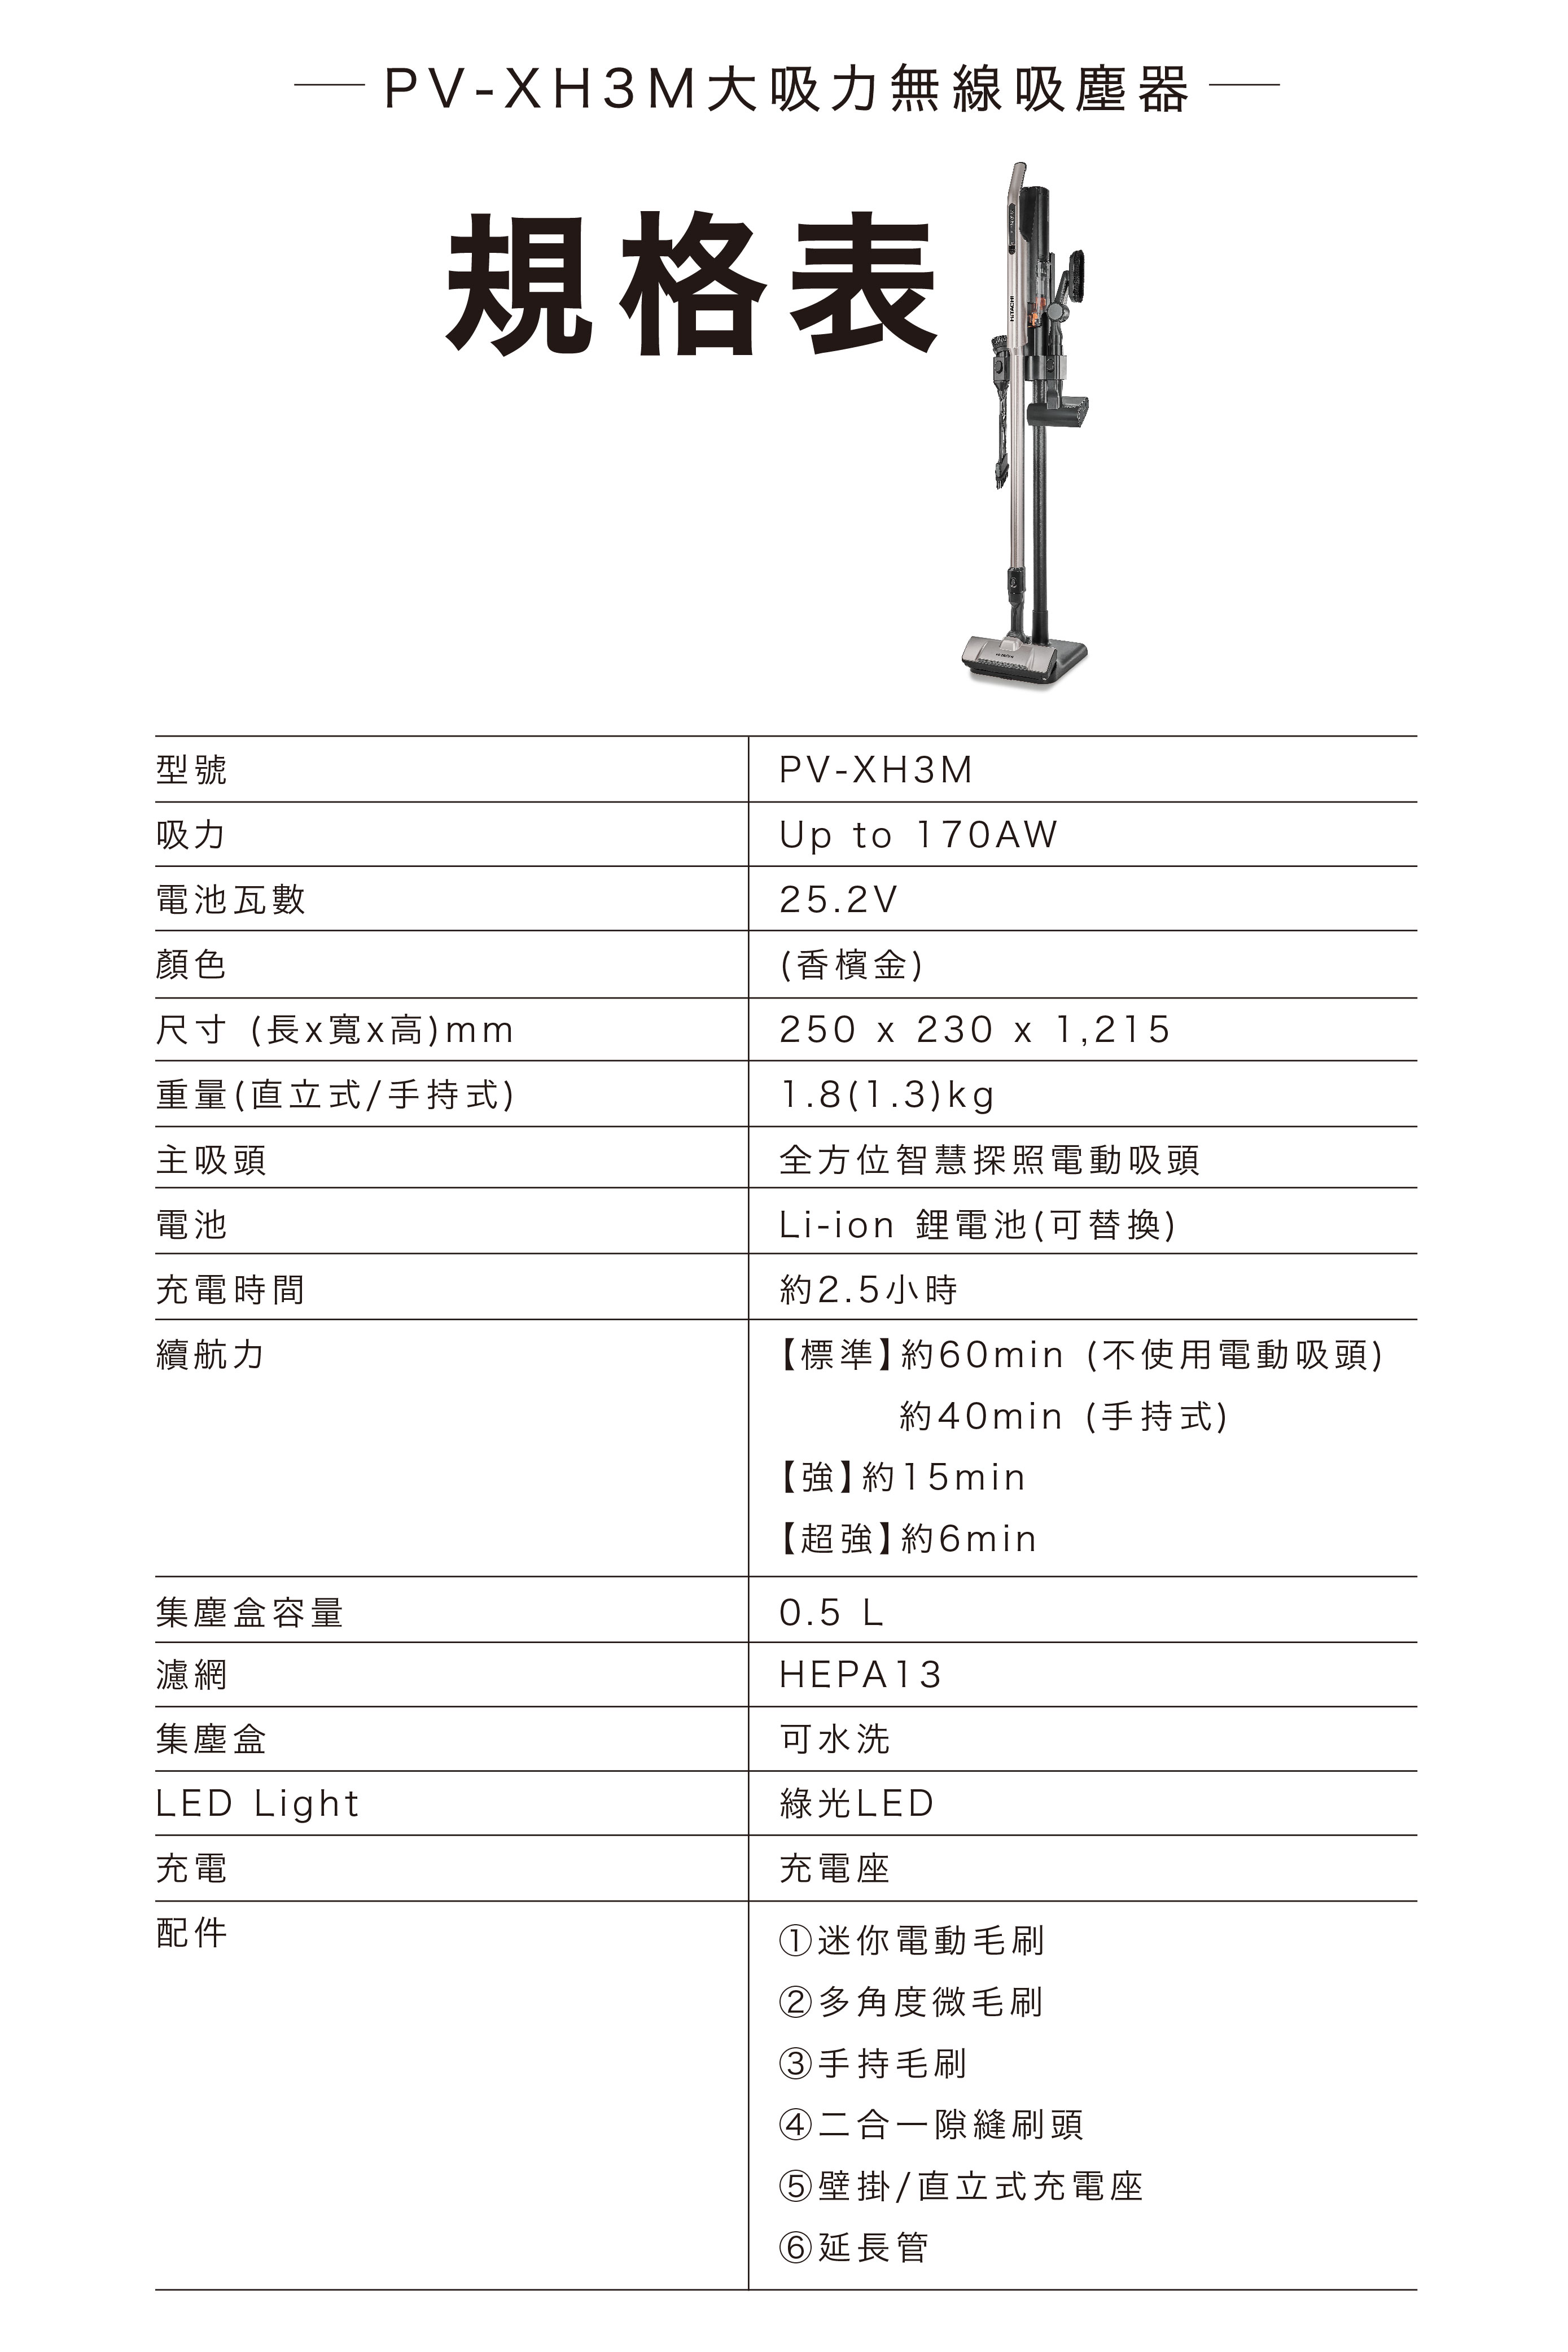 PV-XH3M大吸力無線吸塵器規格表HITACHI型號吸力電池瓦數顏色尺寸(長x寬x高)mm重量(直立式/手持式)主吸頭電池充電時間續航力集塵盒容量濾網集塵盒LED Light充電配件PV-XH3MUp to 170AW25.2V(香檳金)250 x 230 x 1,2151.8(1.3)kg全方位智慧探照電動吸頭Li-ion 鋰電池(可替換)約2.5小時【標準】約60min(不使用電動吸頭)約40min(手持式)【強】約15min【超強】約6min0.5 LHEPA13可水洗綠光LED充電座①迷你電動毛刷②多角度微毛刷③手持毛刷二合一隙縫刷頭⑤壁掛/直立式充電座⑥延長管